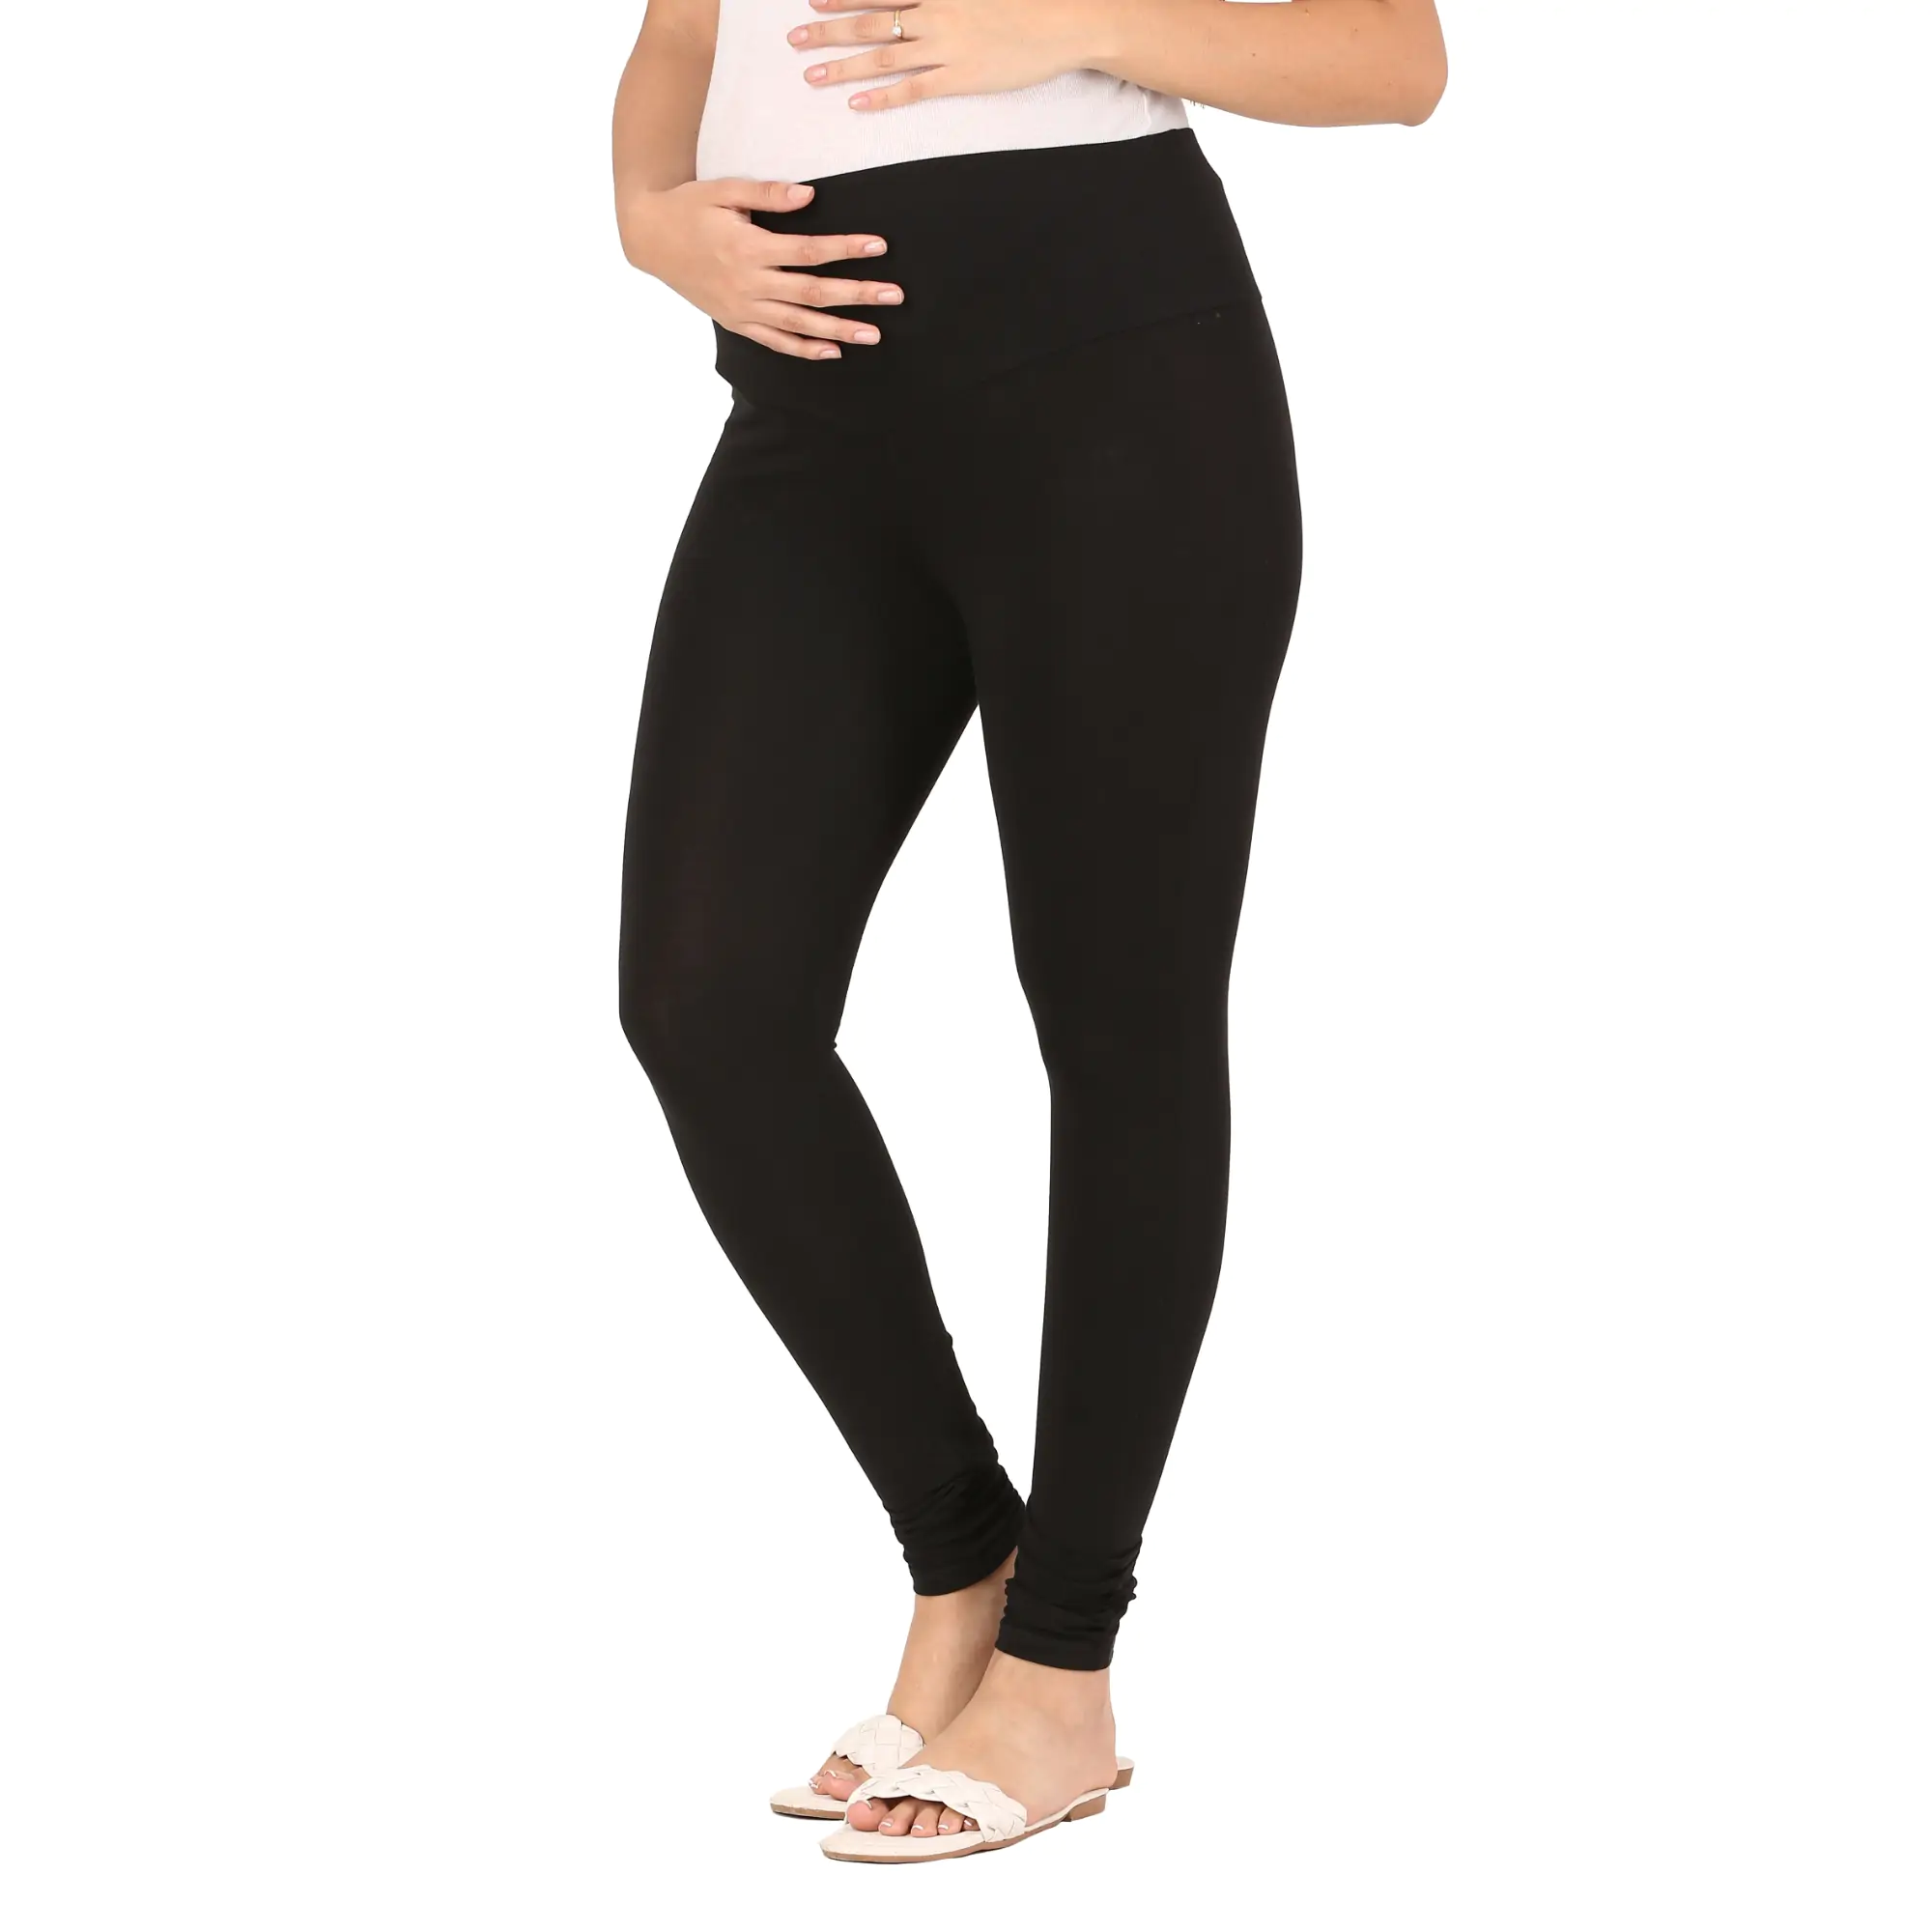 Mylo Stretchable Pregnancy & Post Delivery Leggings - Black (M)